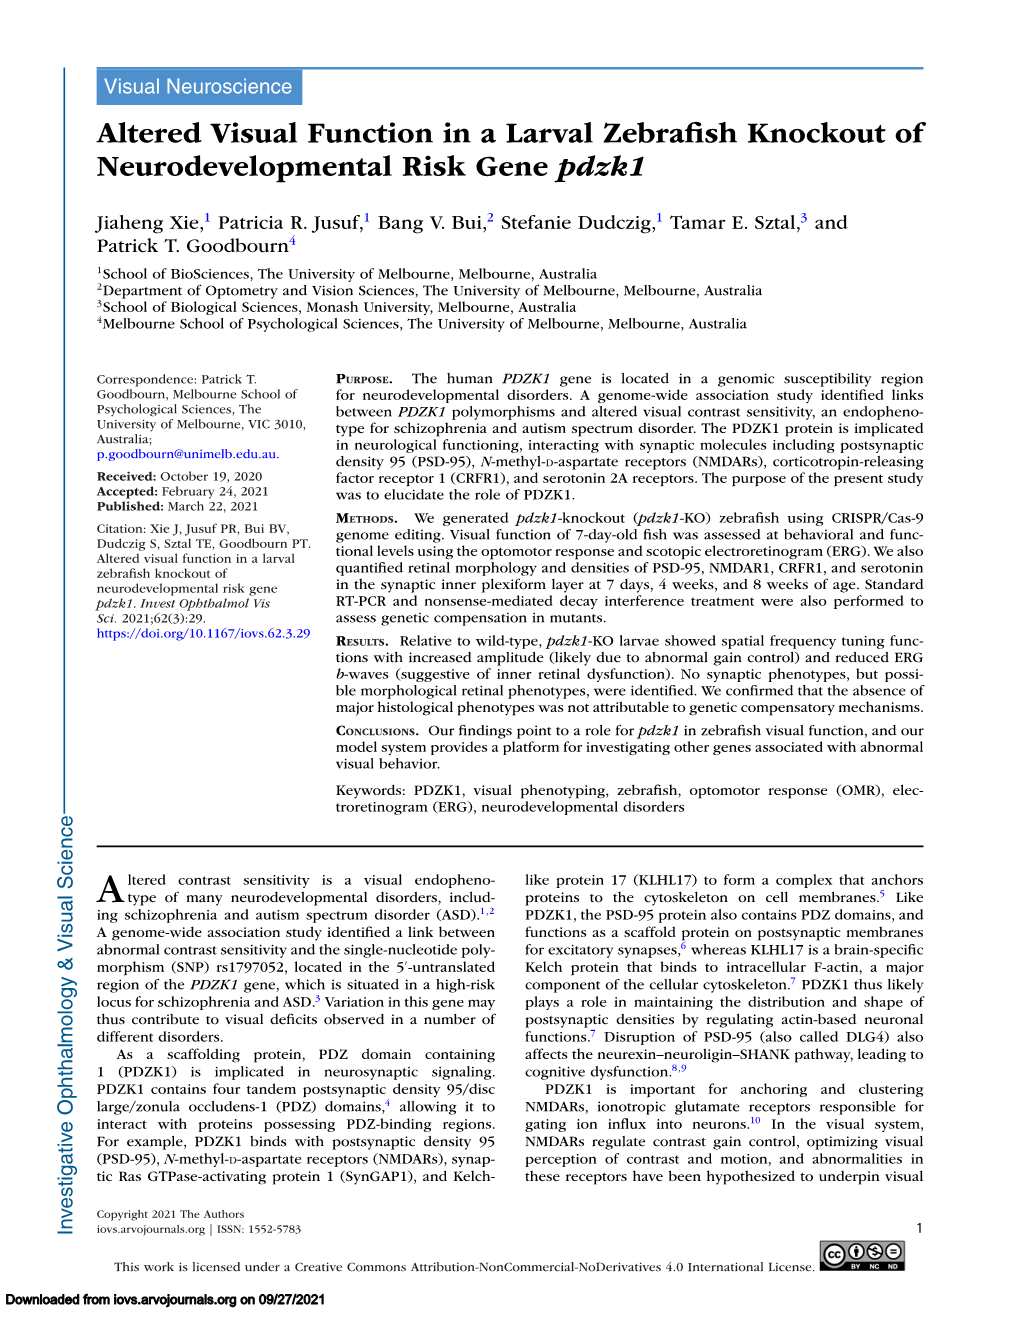 Altered Visual Function in a Larval Zebrafish Knockout of Neurodevelopmental Risk Gene Pdzk1